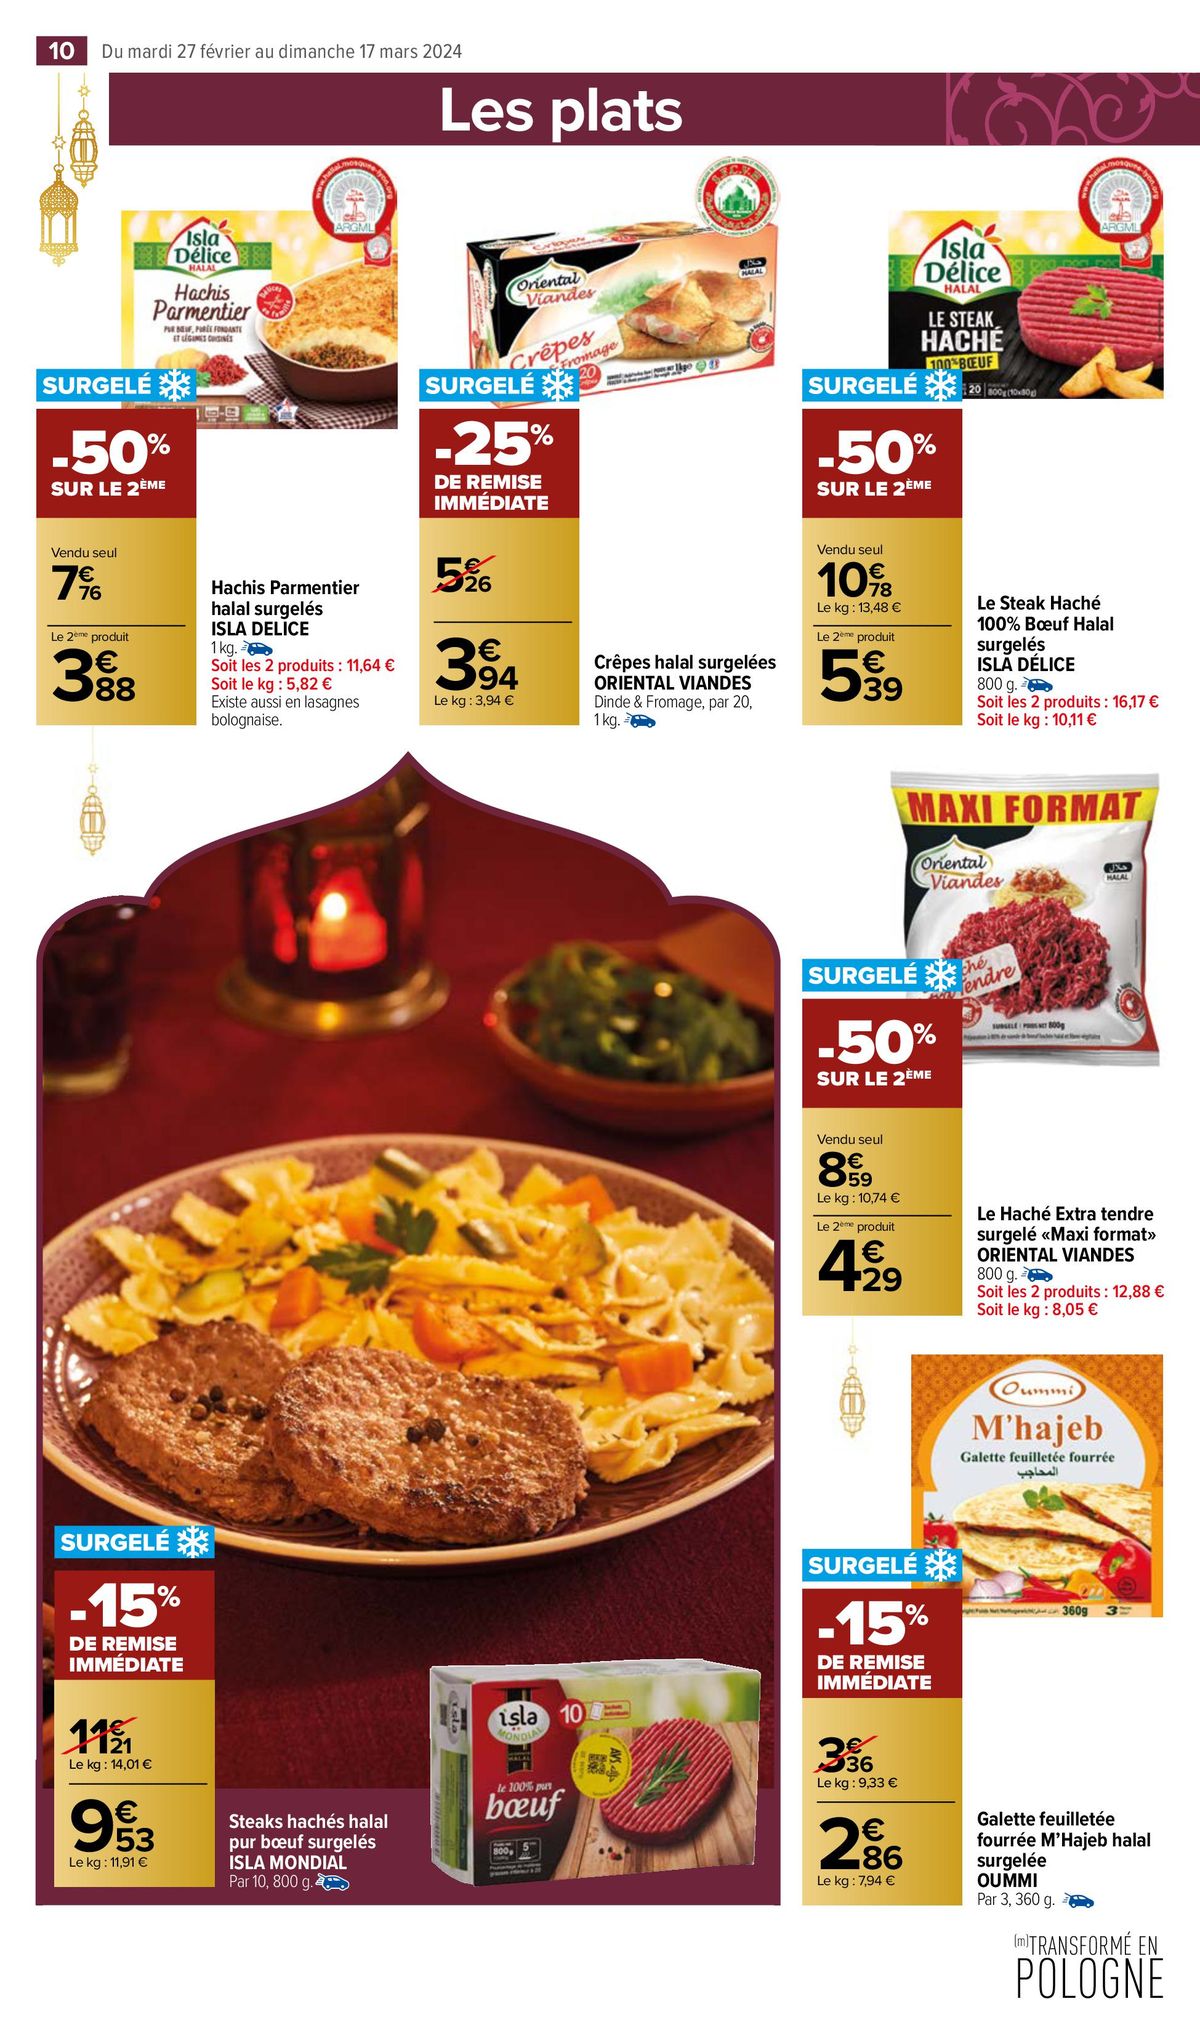 Catalogue Ramadan à petits prix !, page 00012